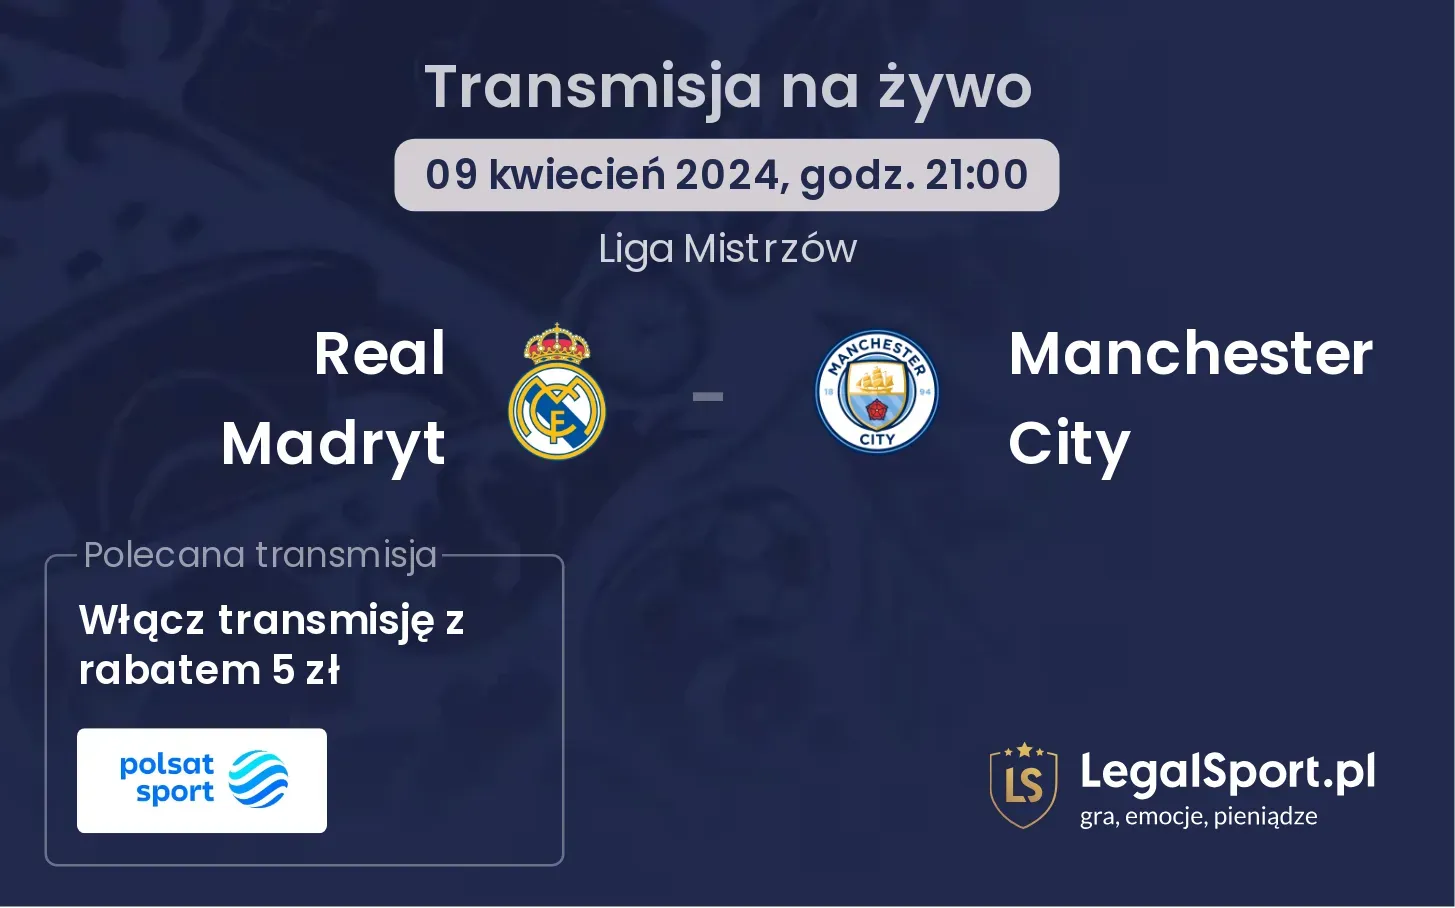 Real Madryt - Manchester City transmisja na żywo